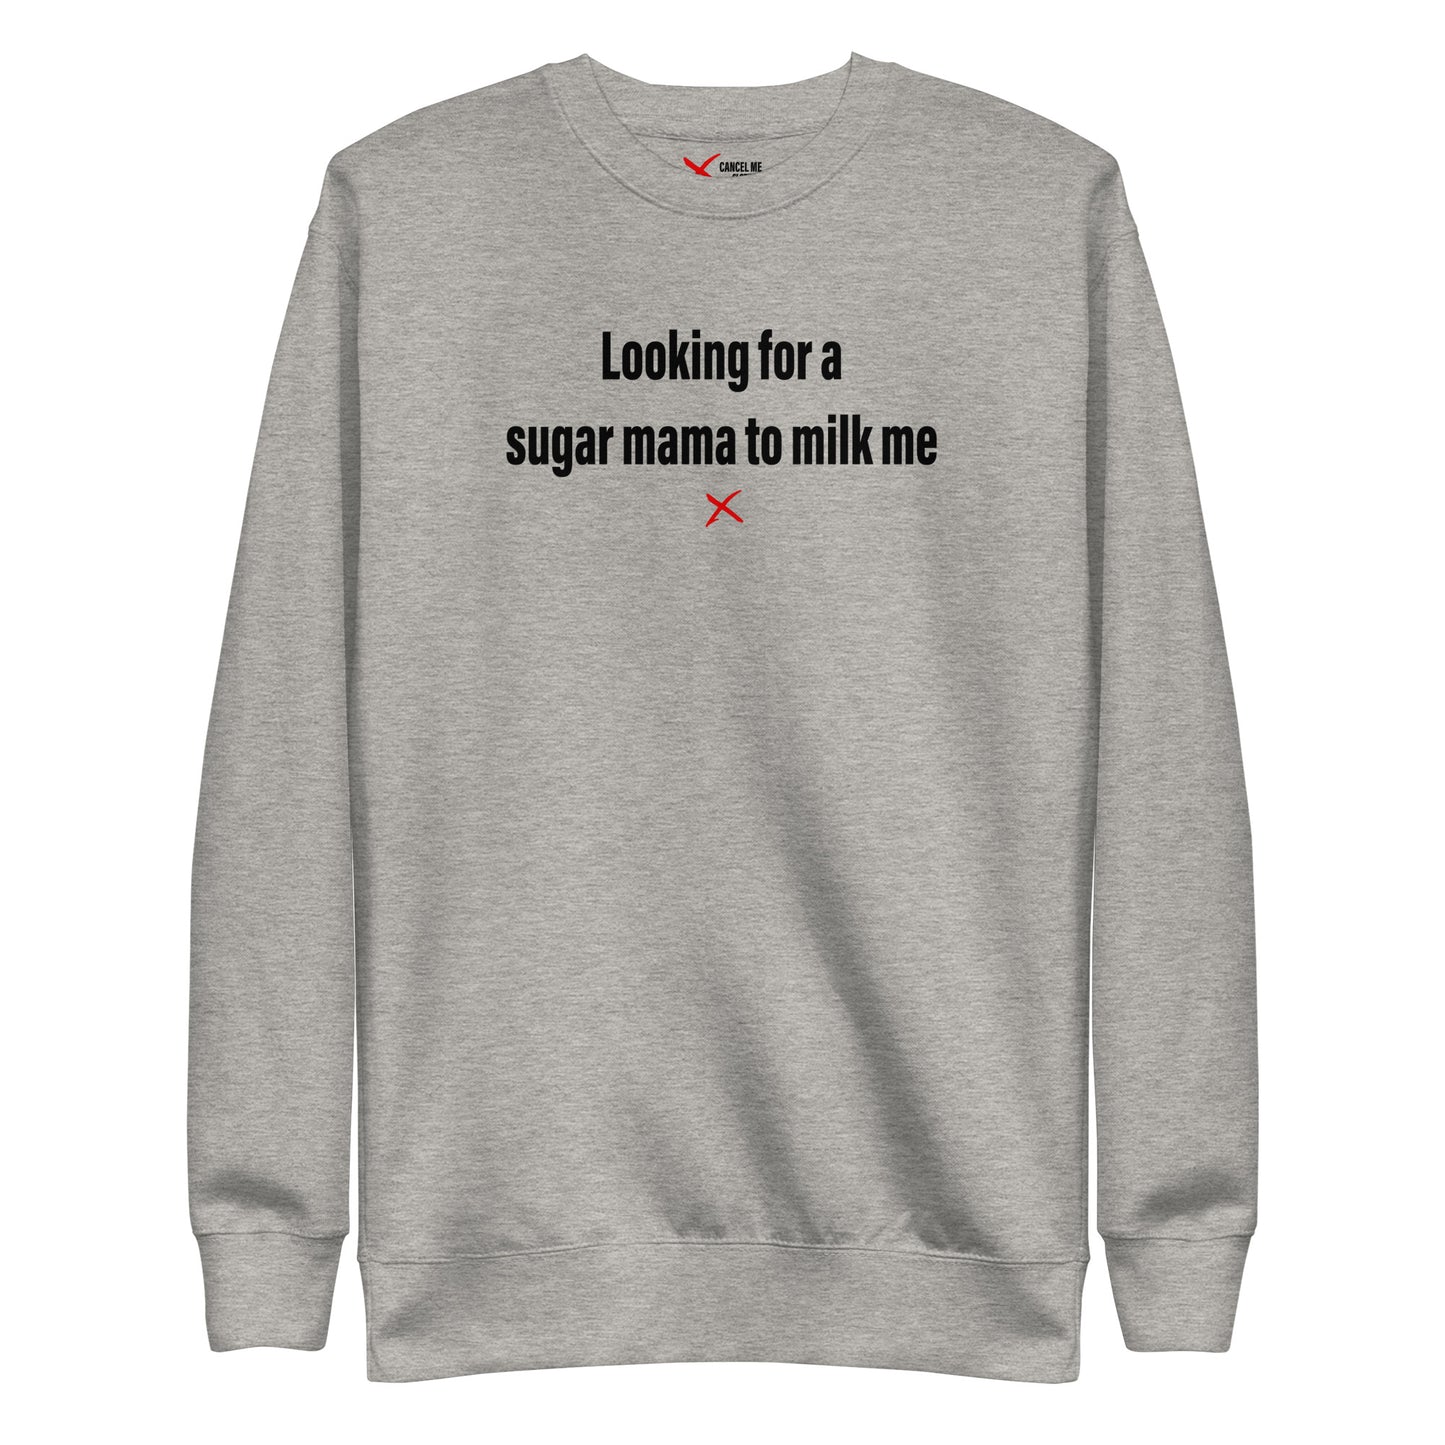 Looking for a sugar mama to milk me - Sweatshirt